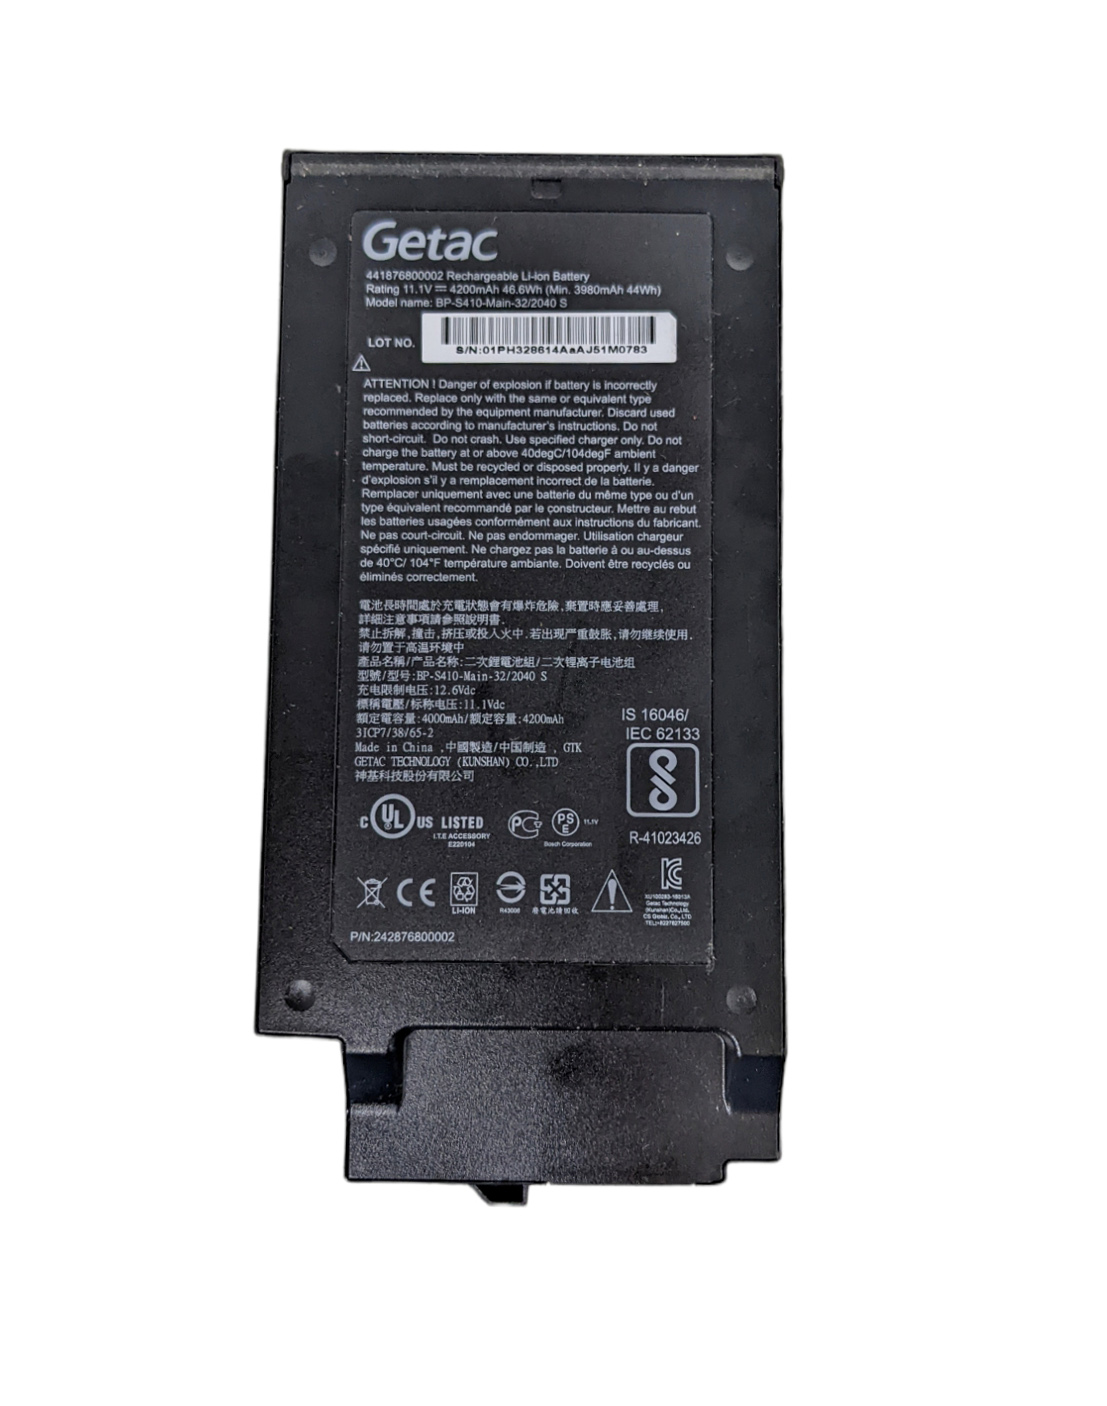 Battery Getac 441876800002 4200mAh 46.6Wh - Click Image to Close